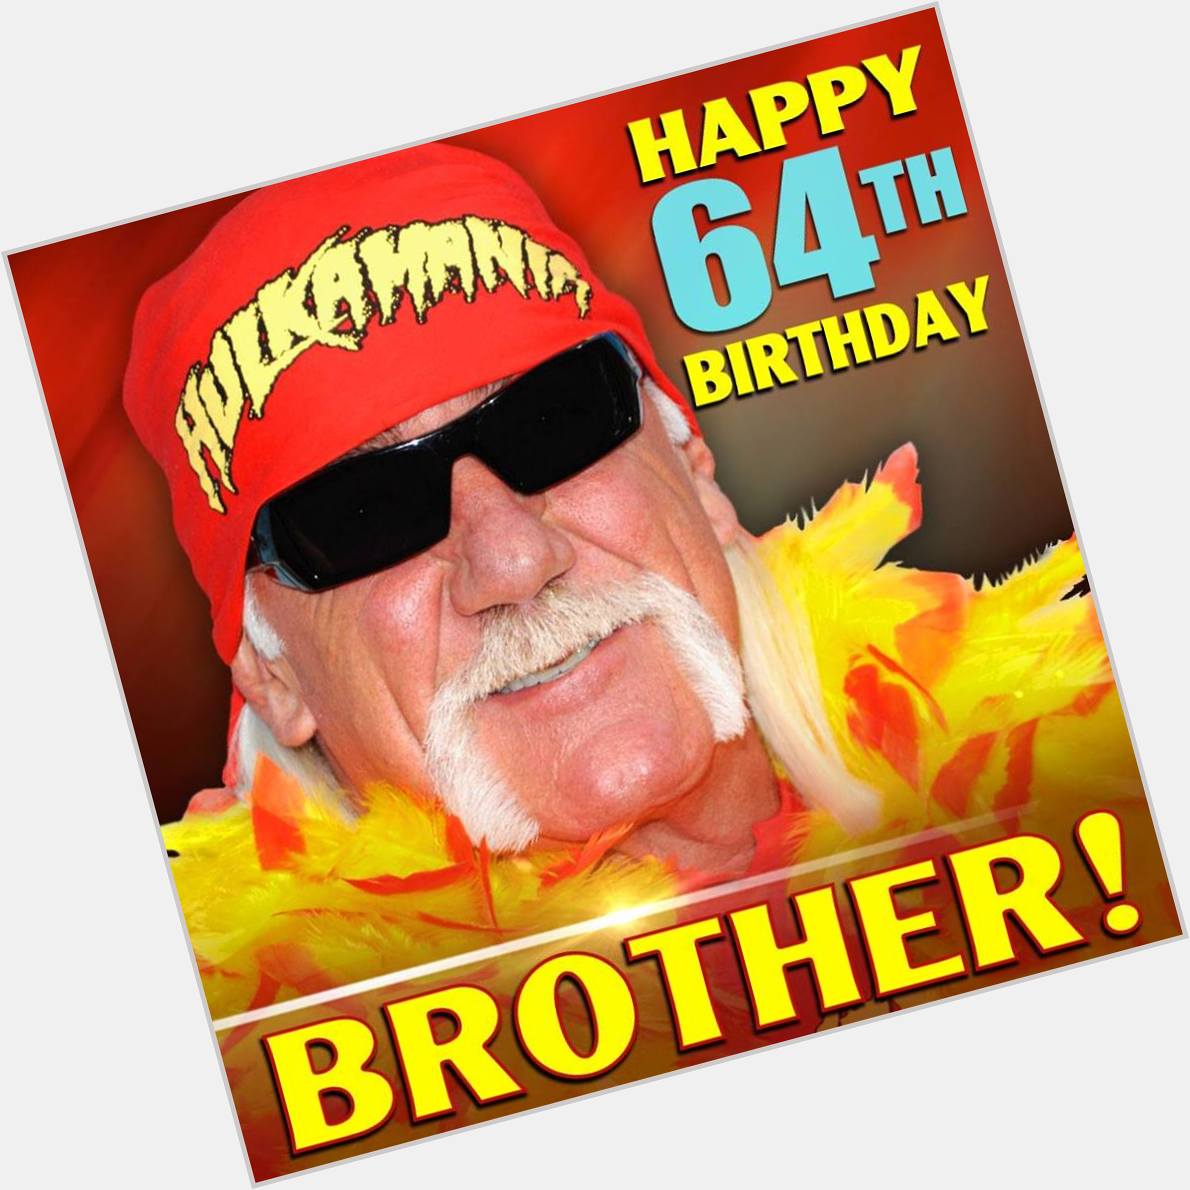 HAPPY BIRTHDAY, BROTHER! Hulk Hogan turns 64 today. 